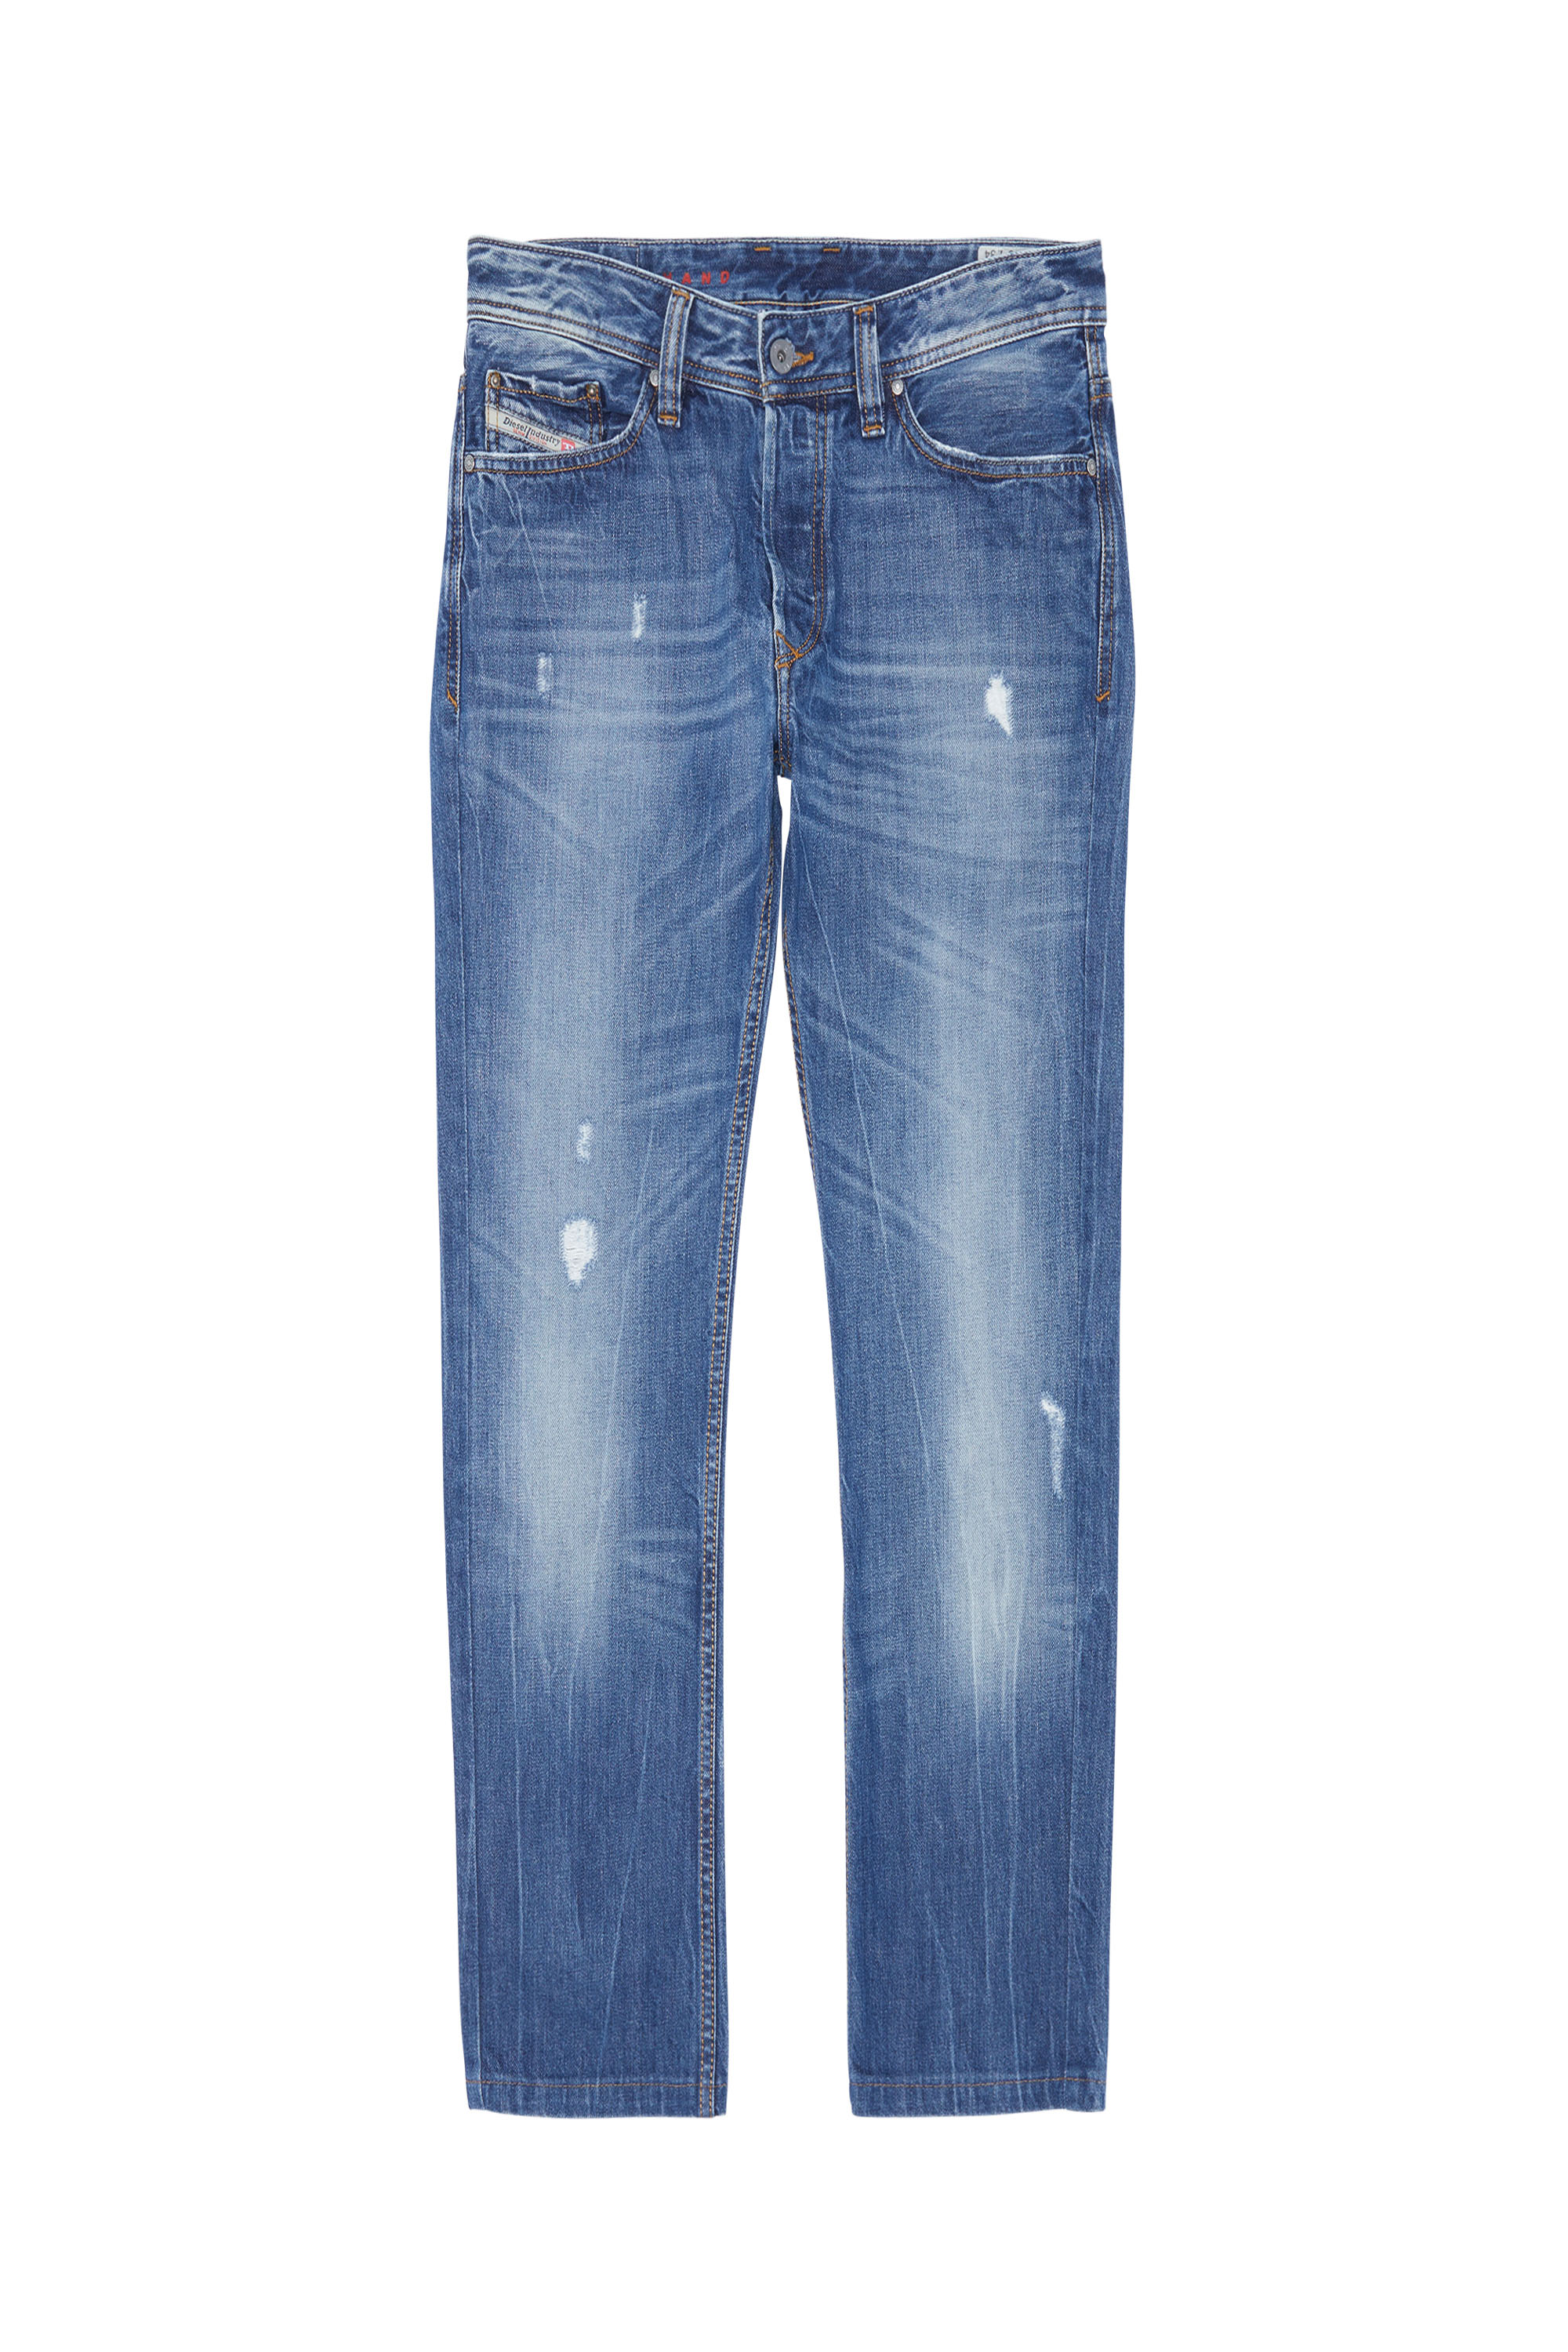 VIKER, Medium blue - Jeans